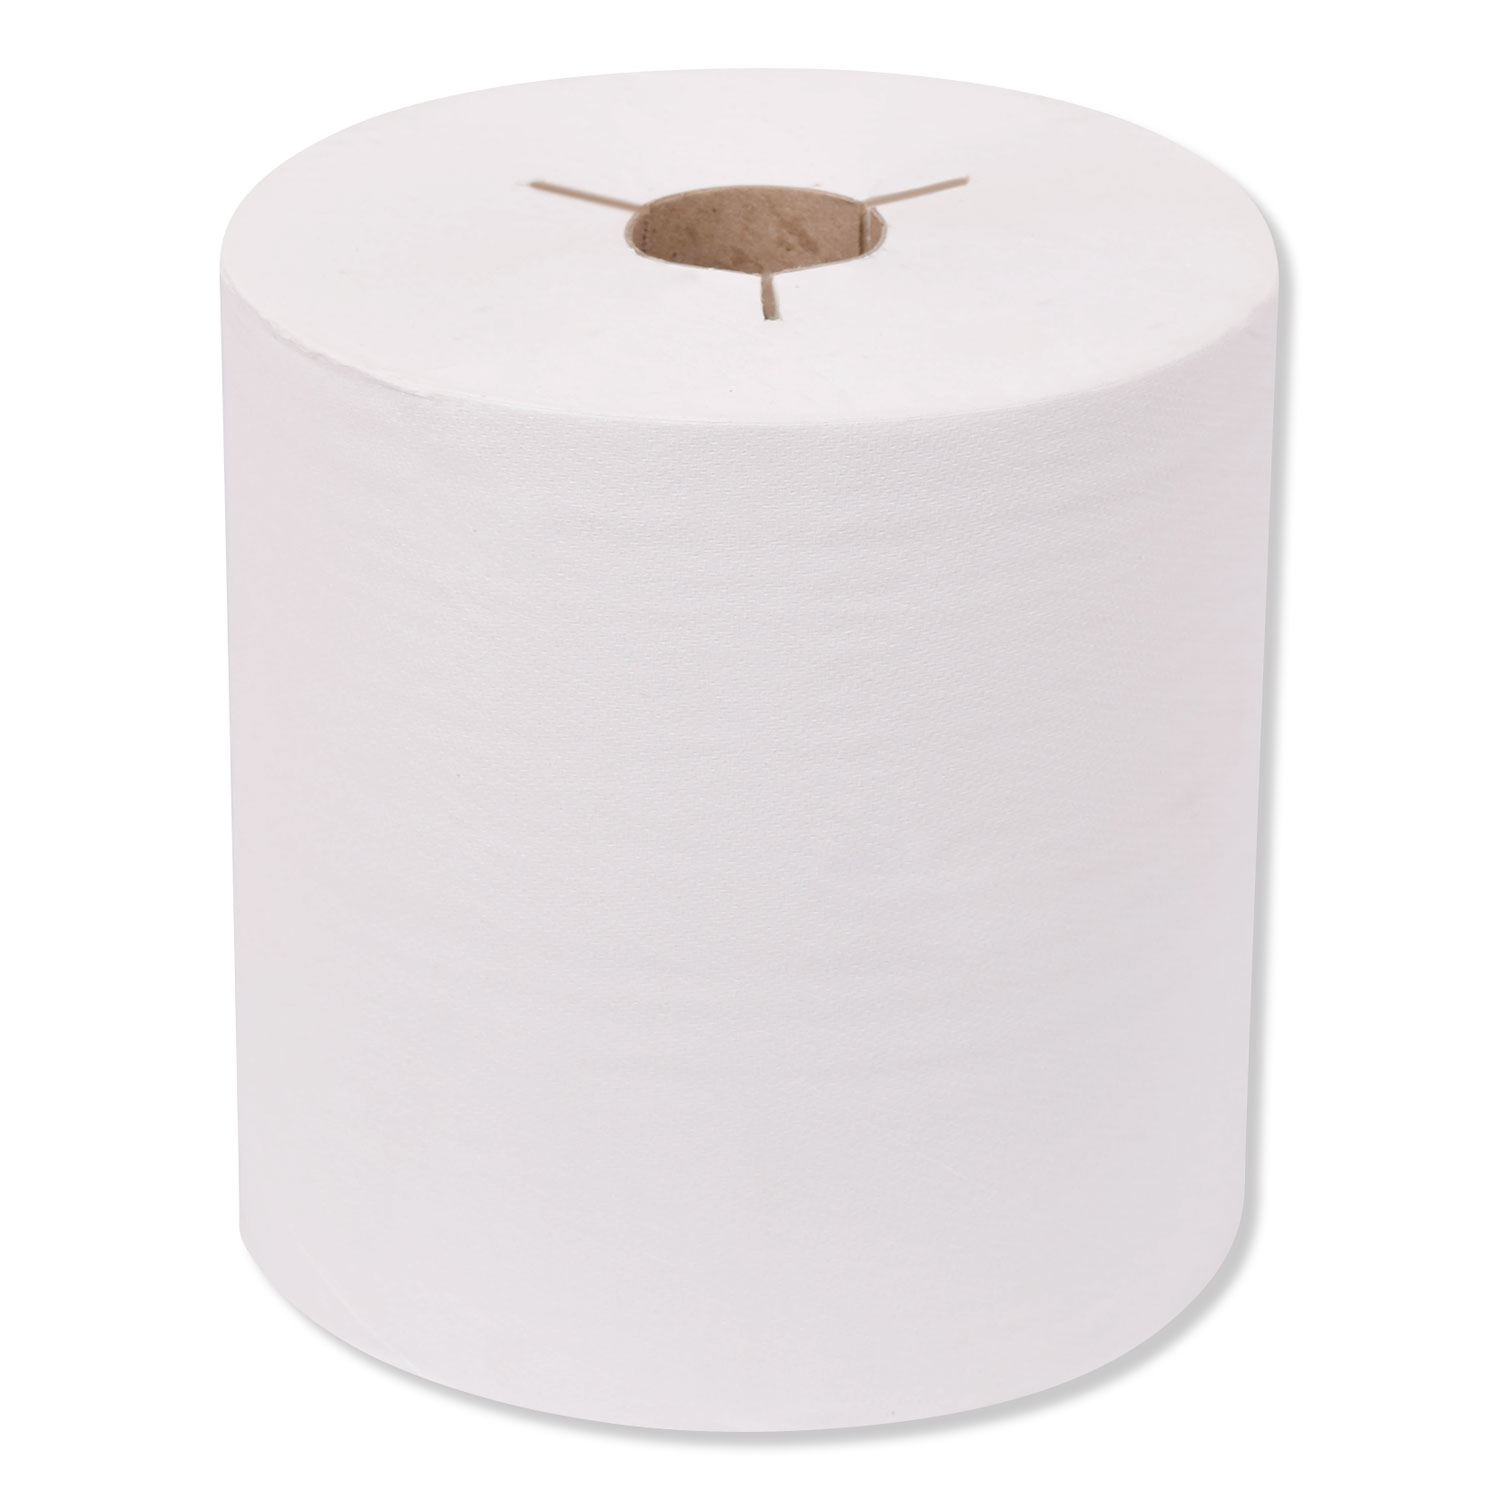  Tork 8031900 Universal Hand Towel Roll, Notched, 8 x 800 ft, White, 6 Rolls/Carton (TRK8031900) 